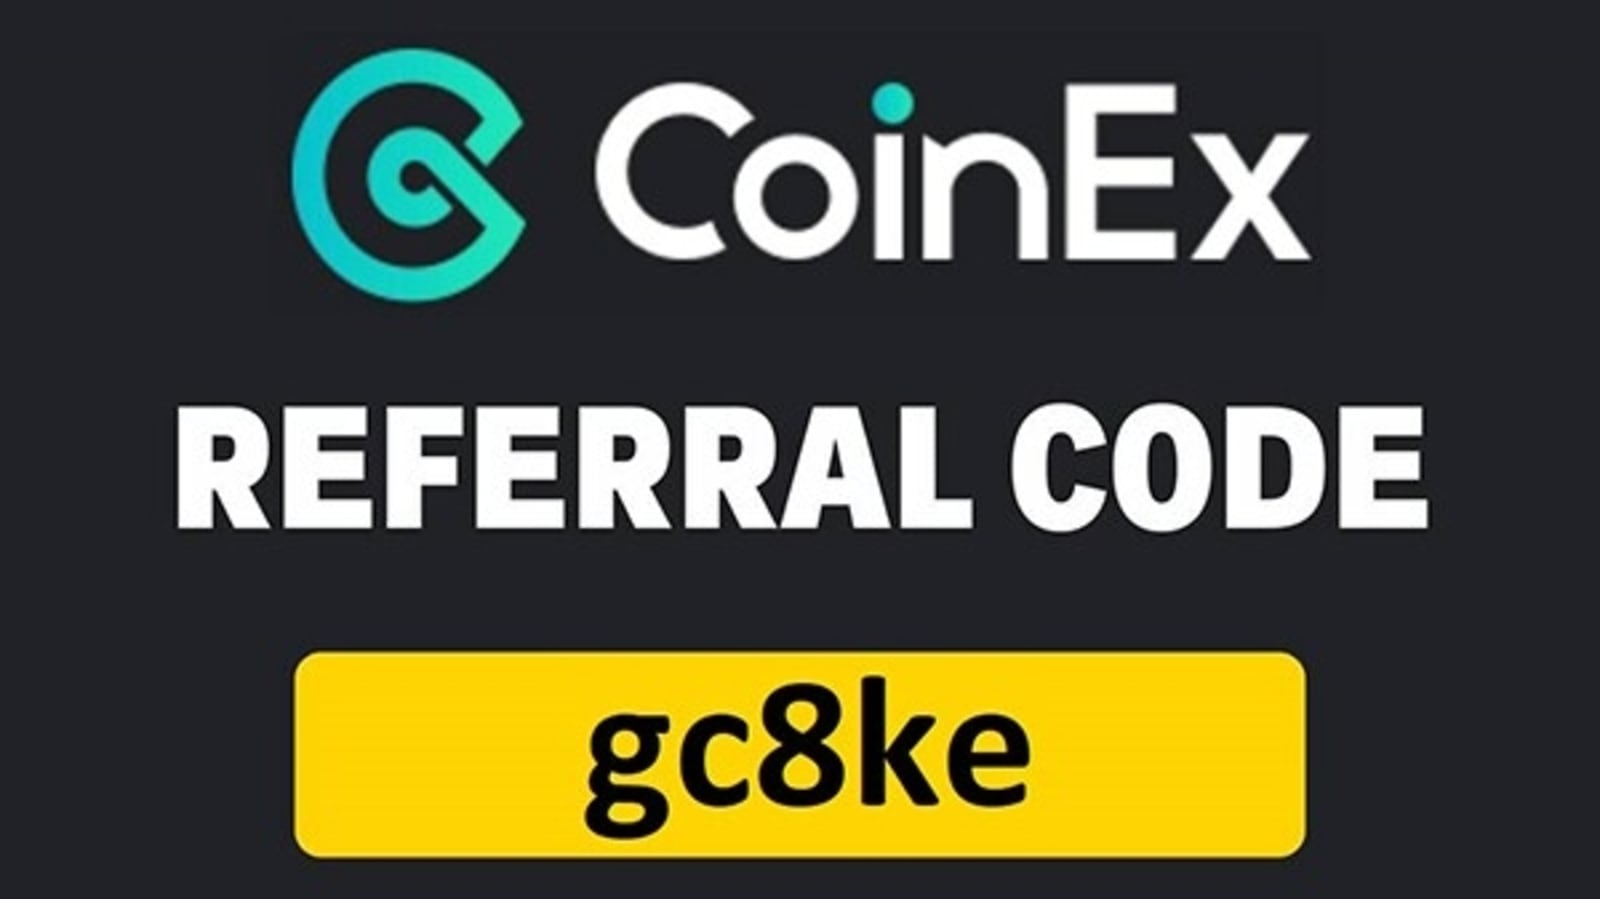 Coinex Referral Code gc8ke, Get 50 Sign Up Bonus Hindustan Times